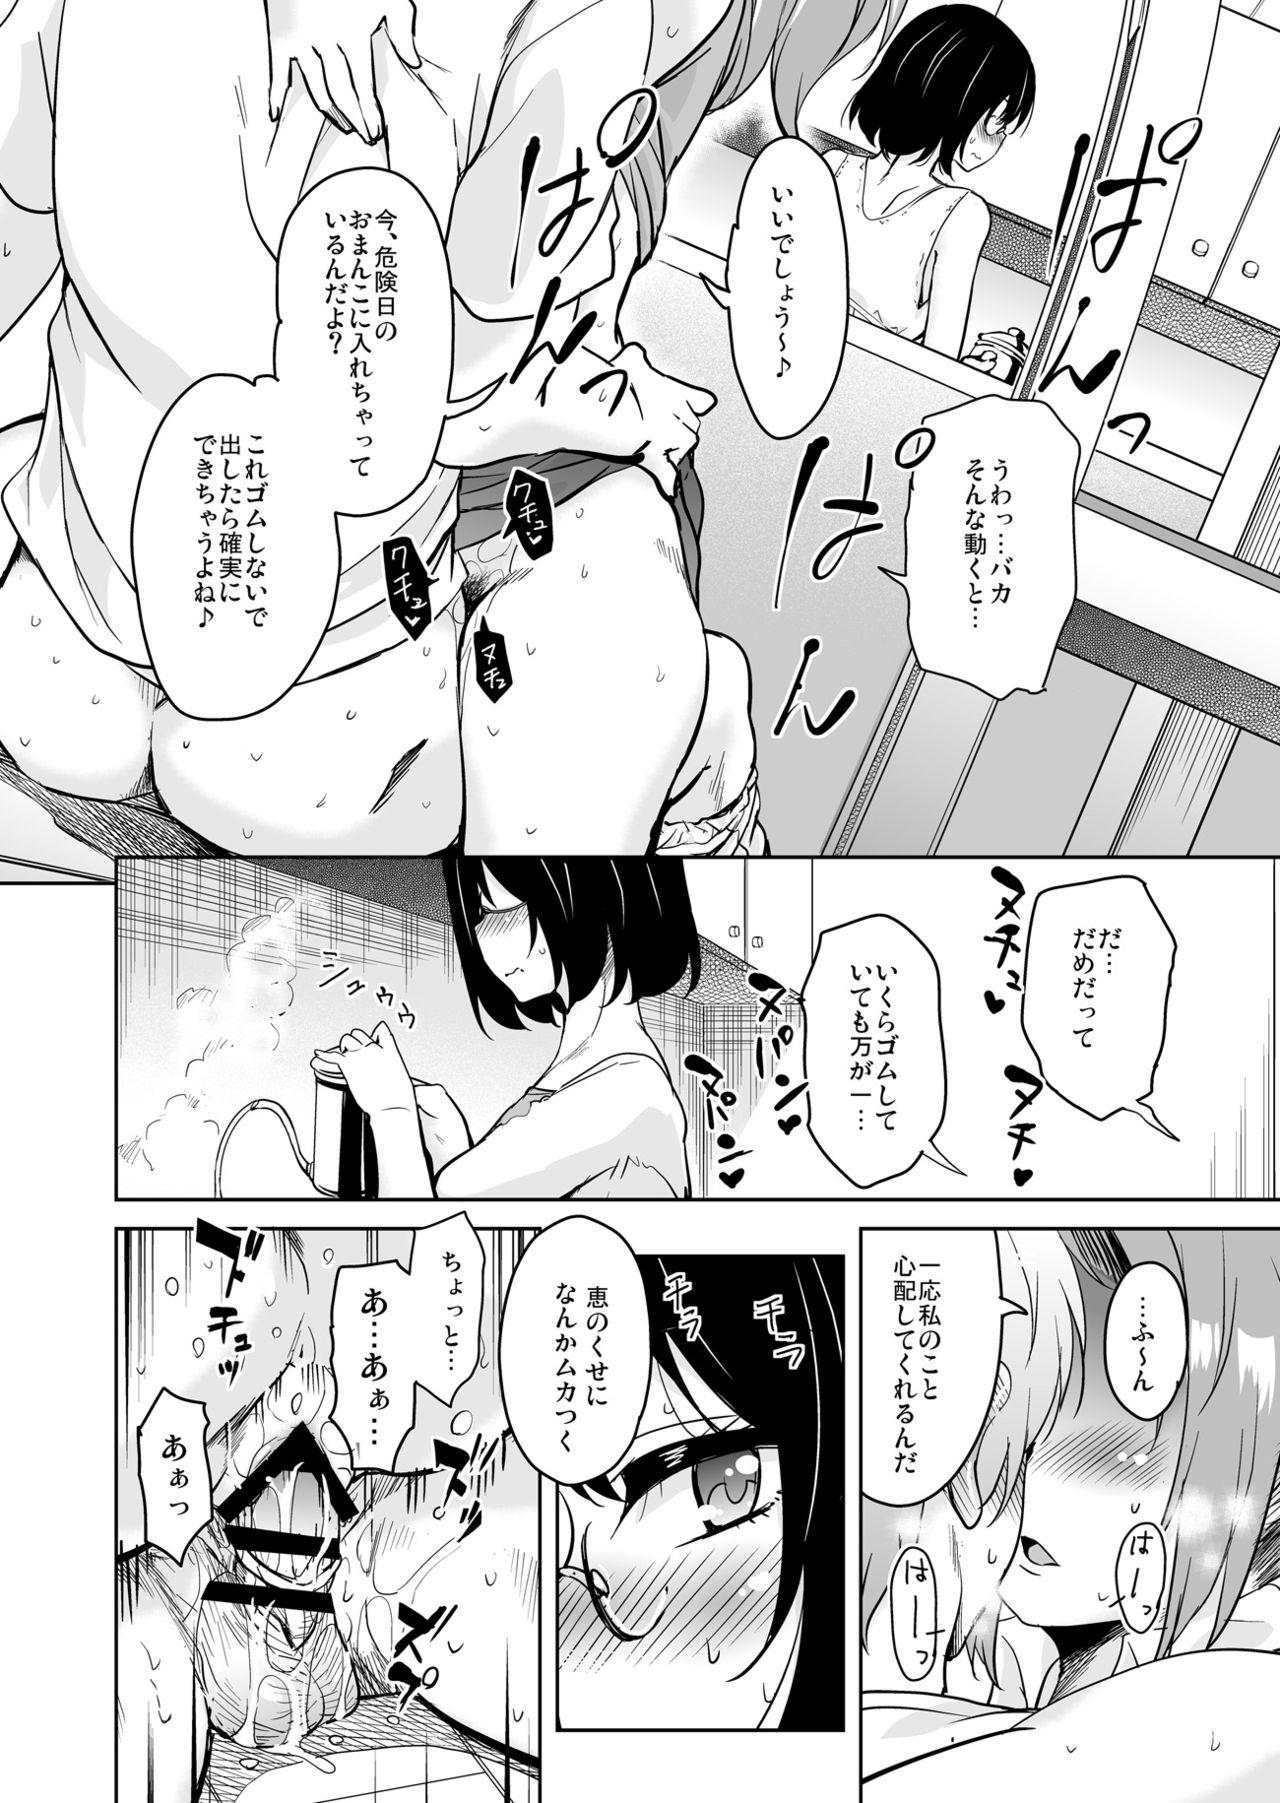 Bubblebutt Ritou e Tenkou Shitara Host Family ga Dosukebe de Komaru 5 - Original Beurette - Page 11